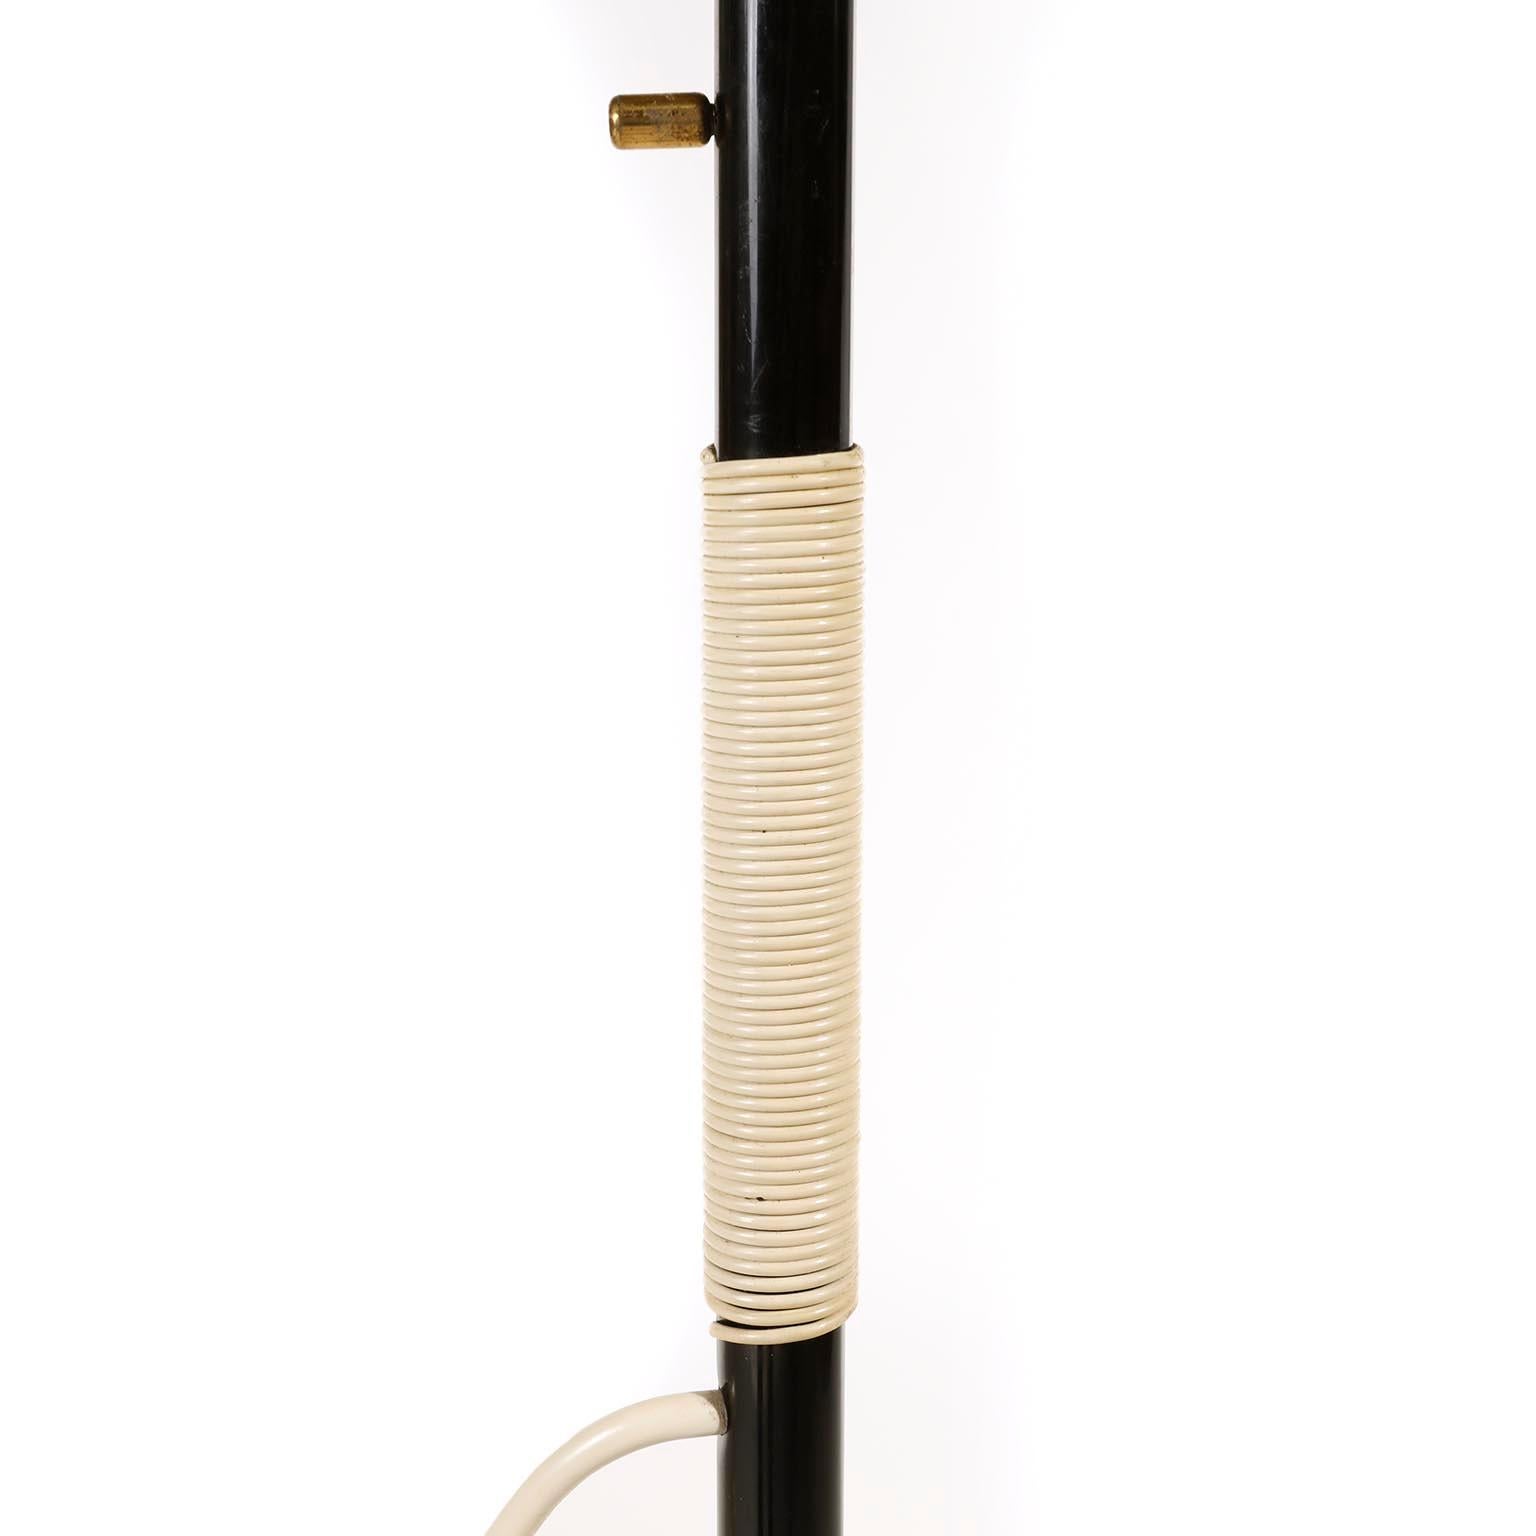 Mid-20th Century Kalmar Floor Lamp 'Pelican' Mod. 2097, Height Adjustable, Brass Black Iron, 1960